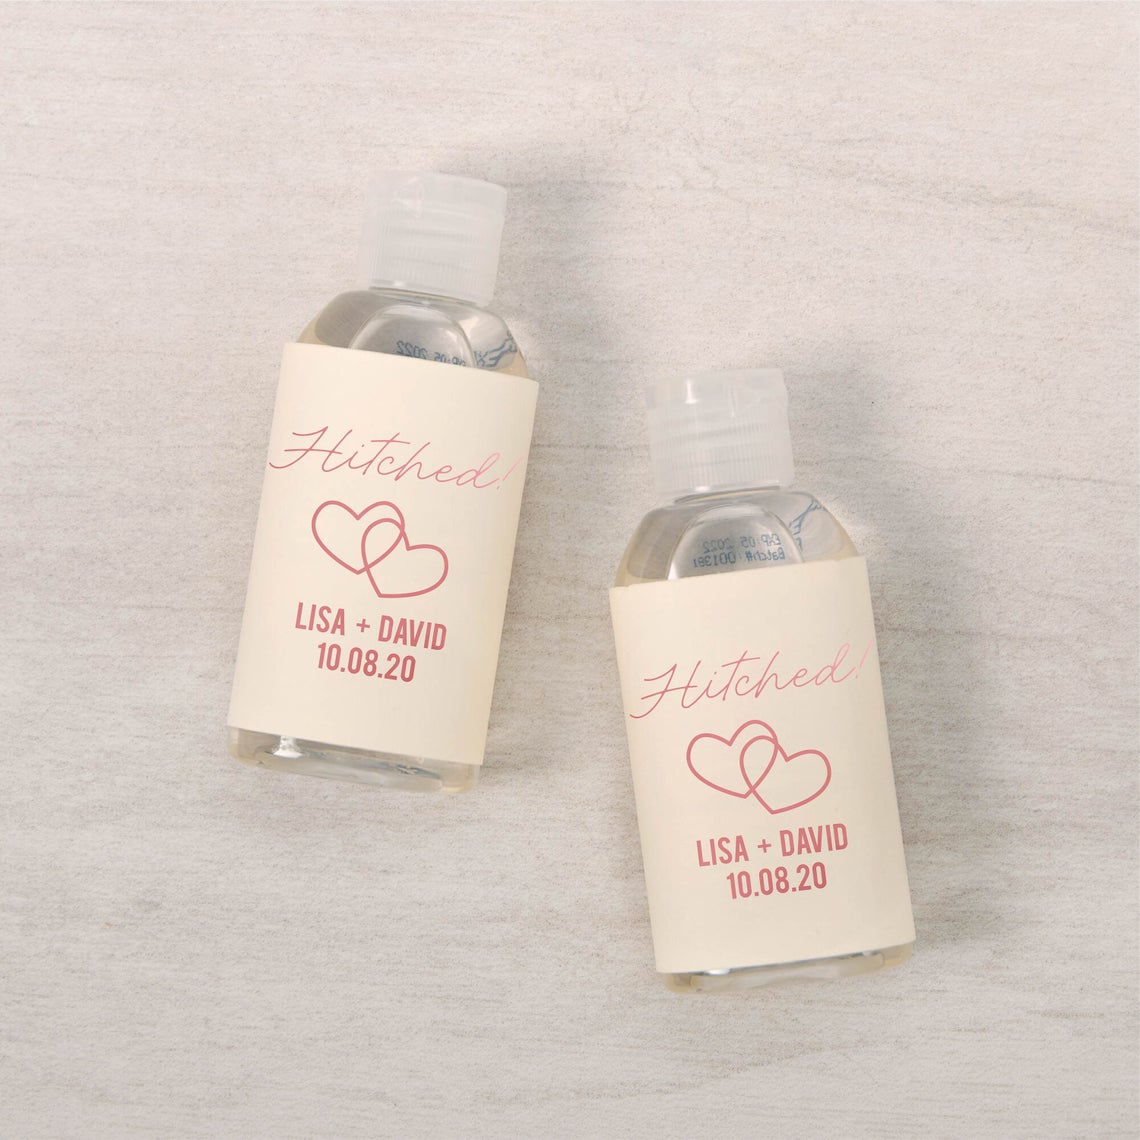 2020 fall wedding ideas include custom hand sanitizer bottles